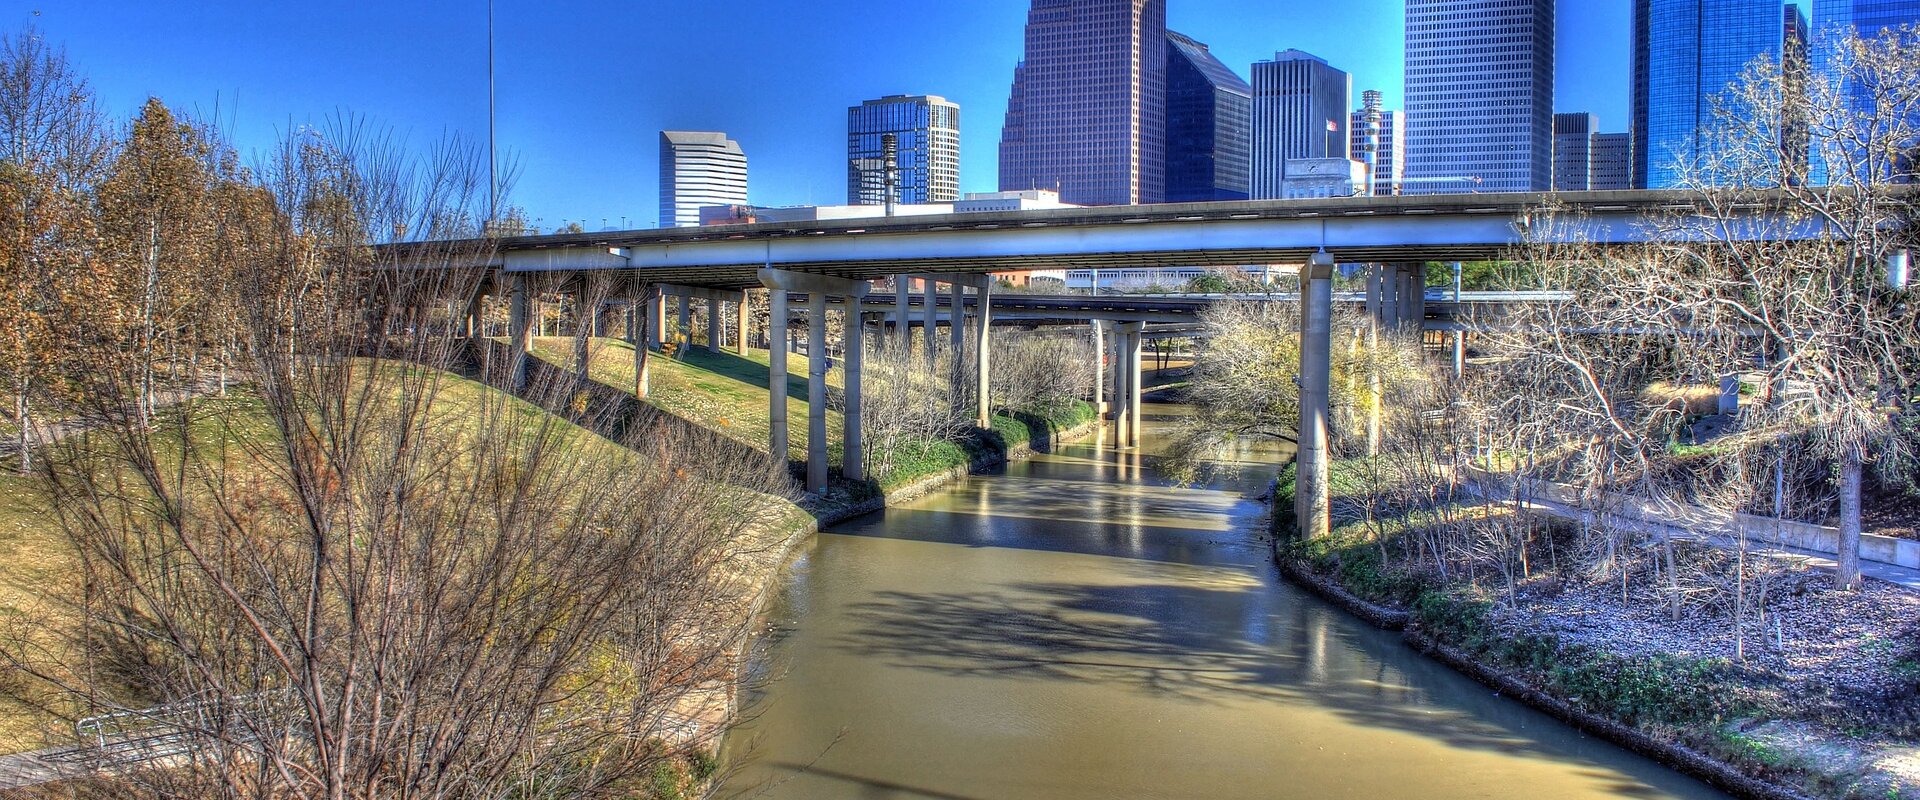 South Houston TX Investment Properties - Reivesti Real Estate